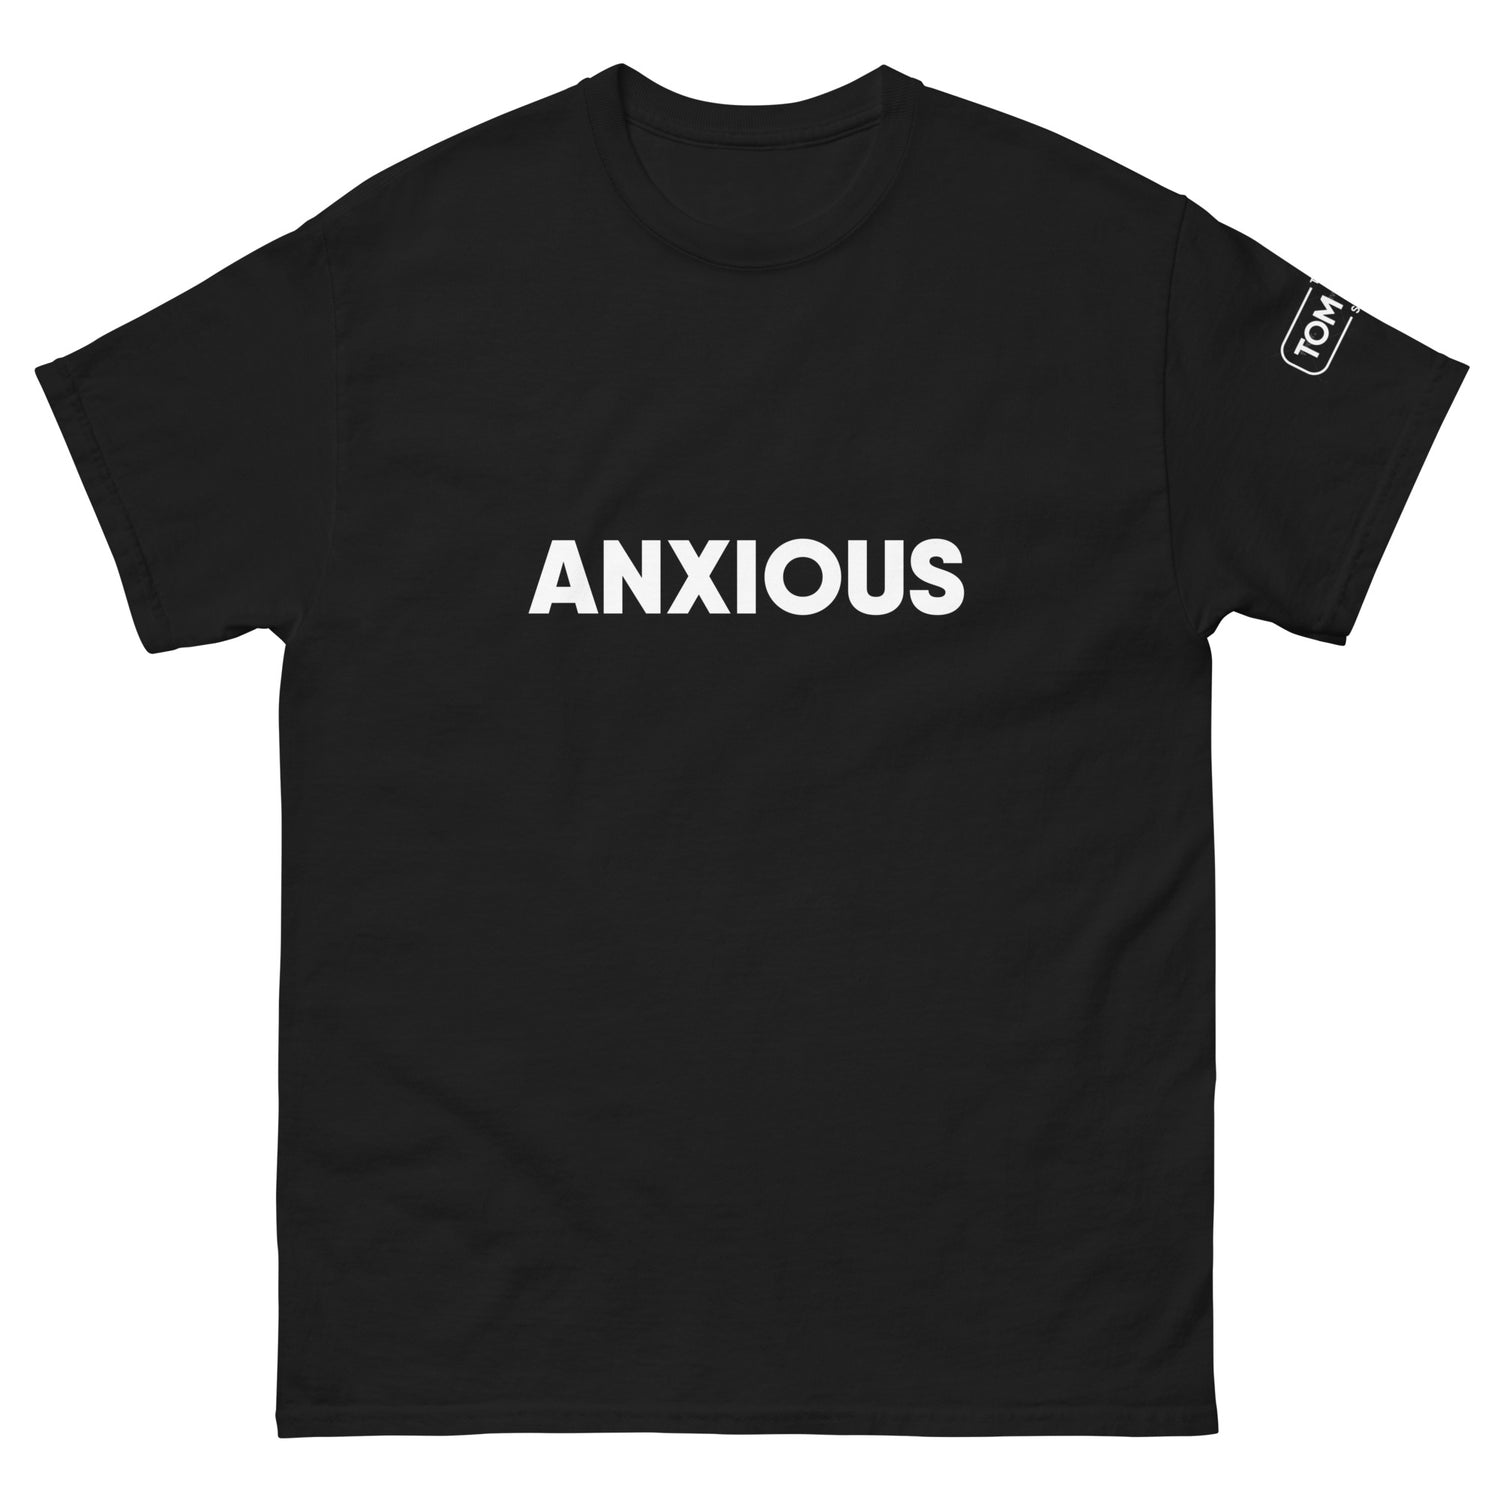 Anxious Text Tee - Black